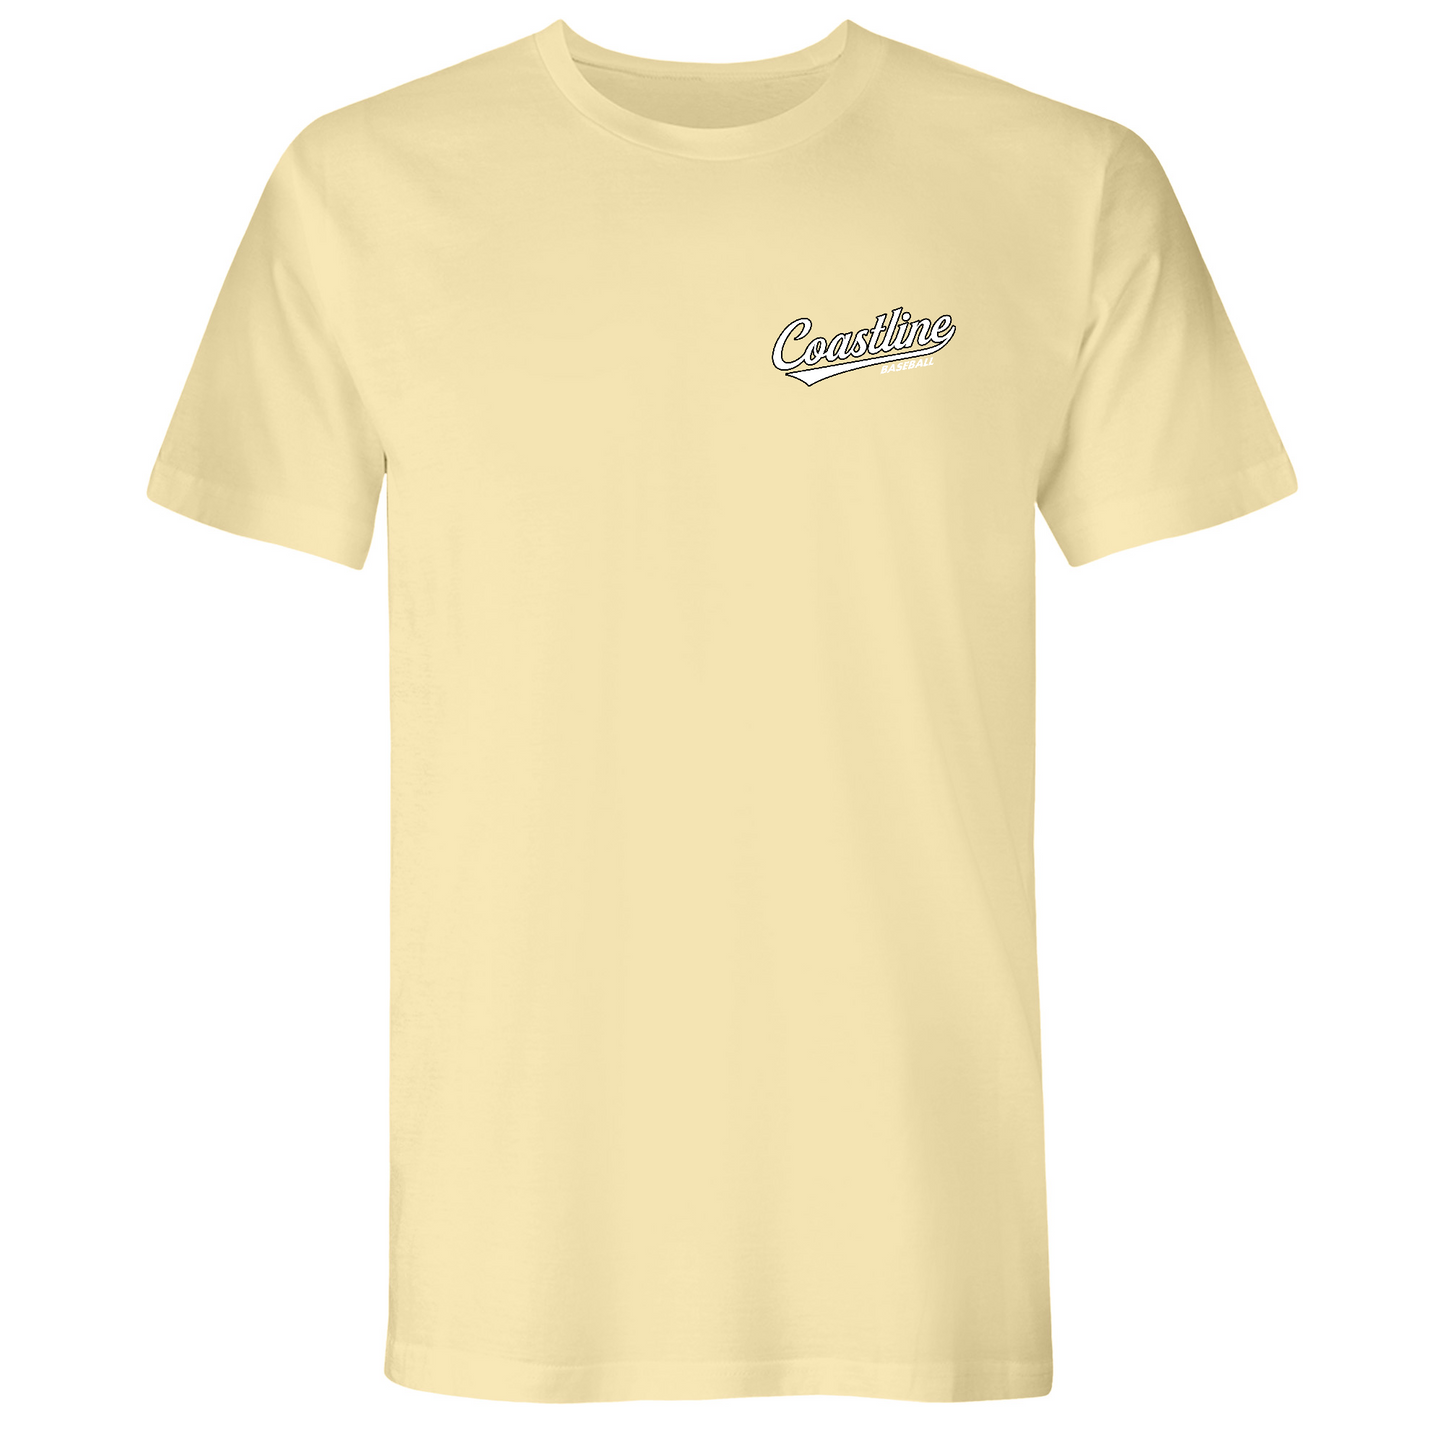 3 - Up Cotton T-Shirt